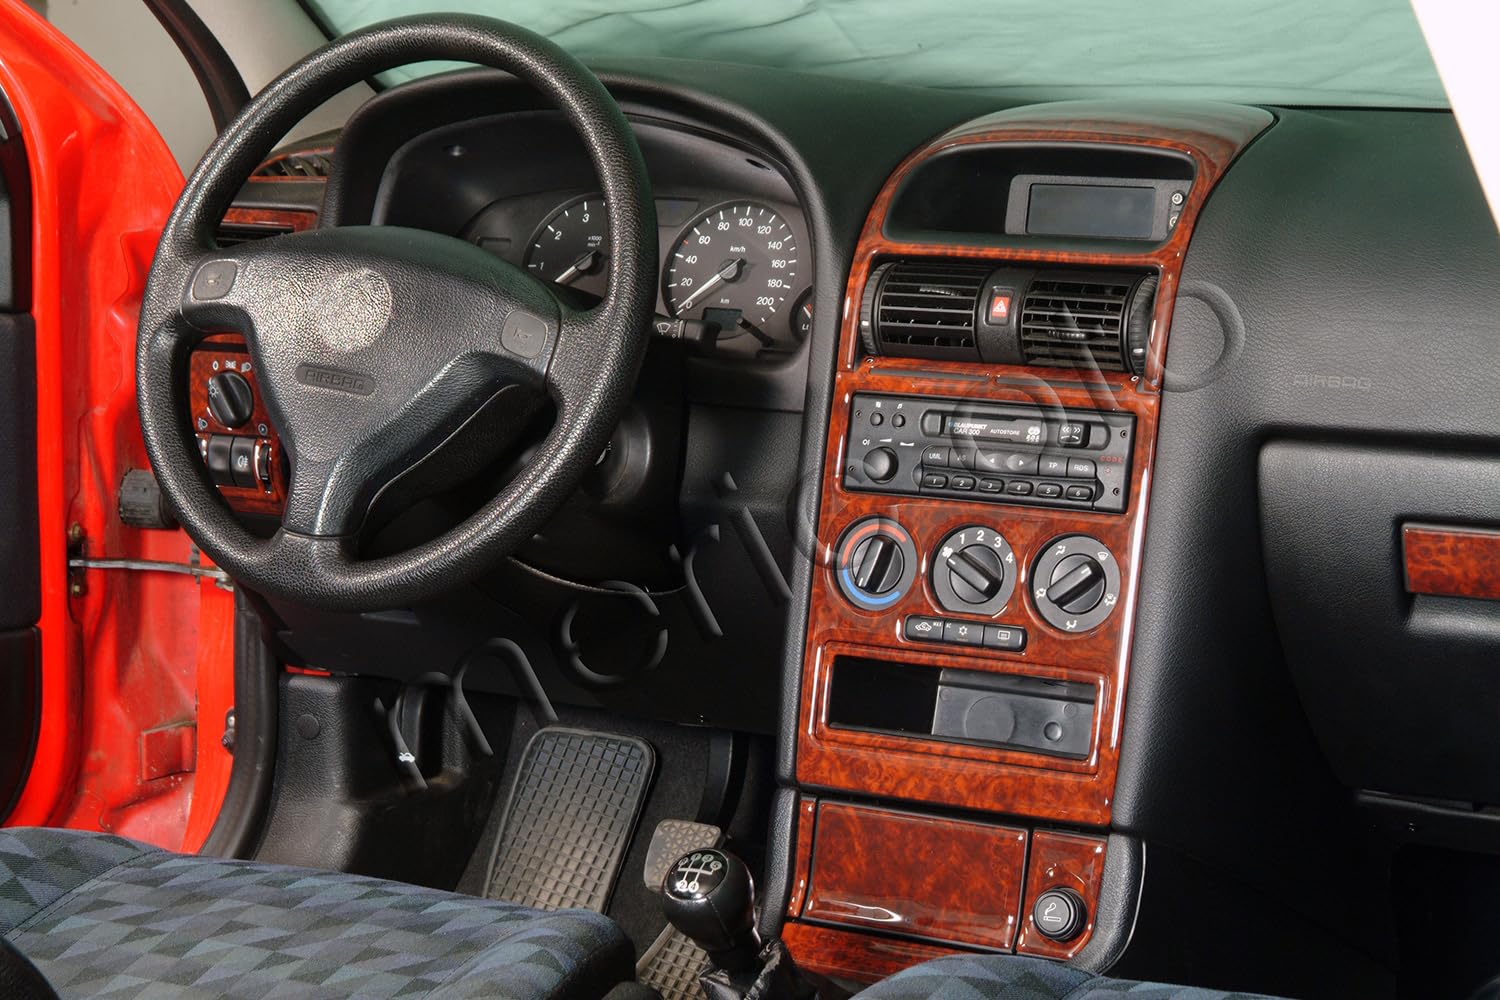 AUTOKLEIDUNG® Cockpit Dekor kompatibel mit Opel Astra G Baujahr 03/1998-12/2003 16 Teile | 3D Aluminium Optik von Autokleidung